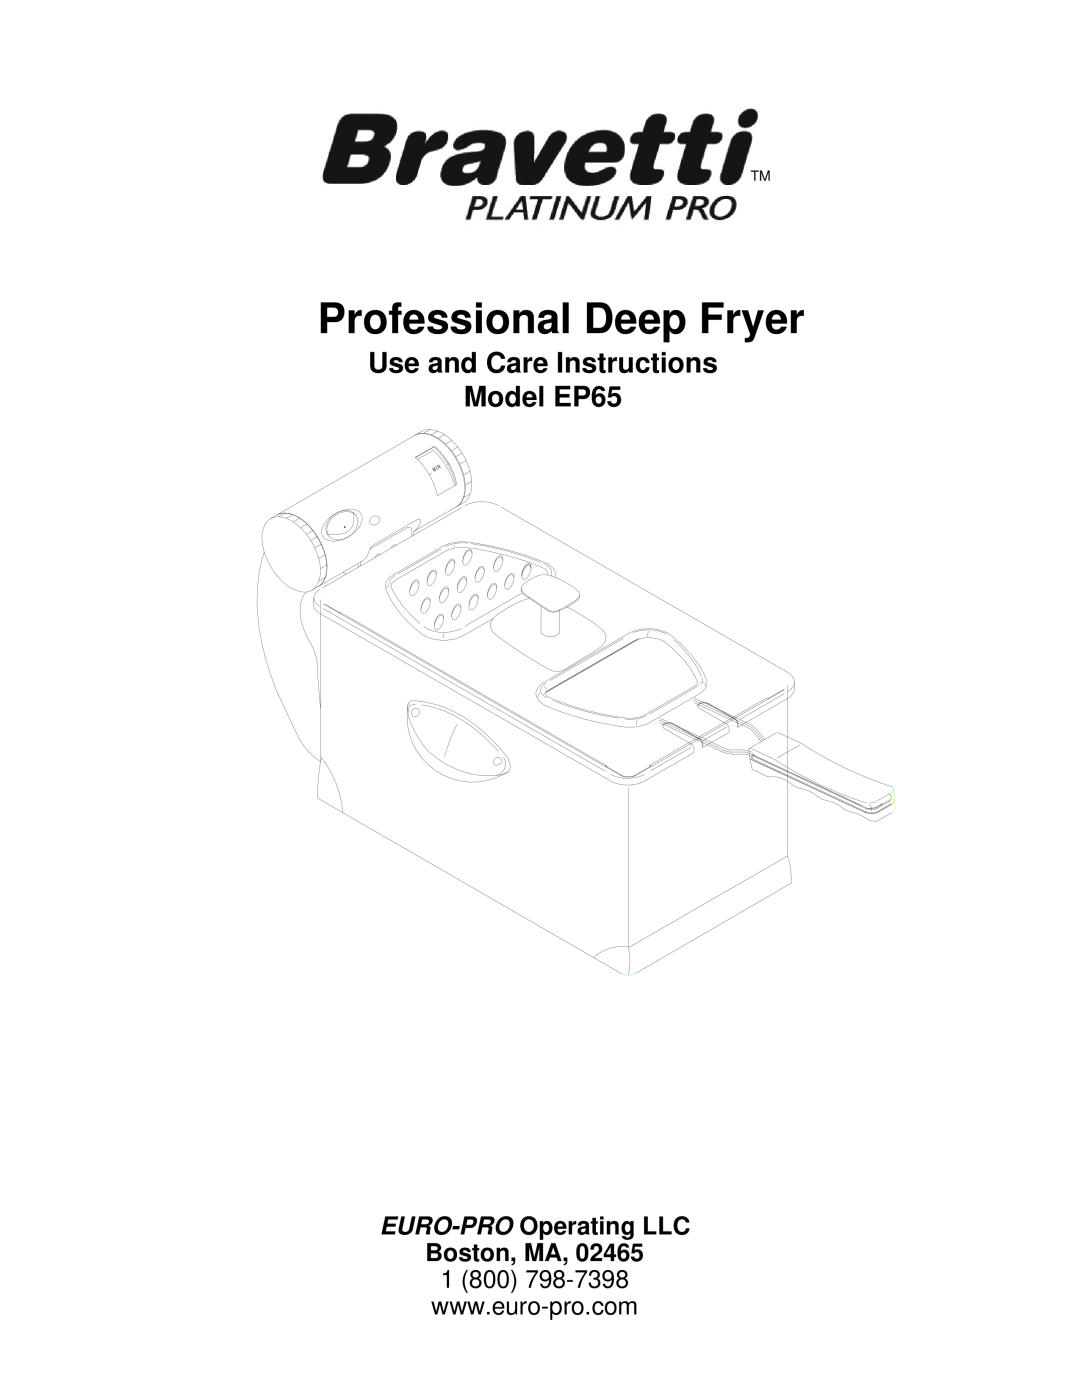 Bravetti manual Use and Care Instructions Model EP65, Professional Deep Fryer, EURO-PRO Operating LLC Boston, MA 